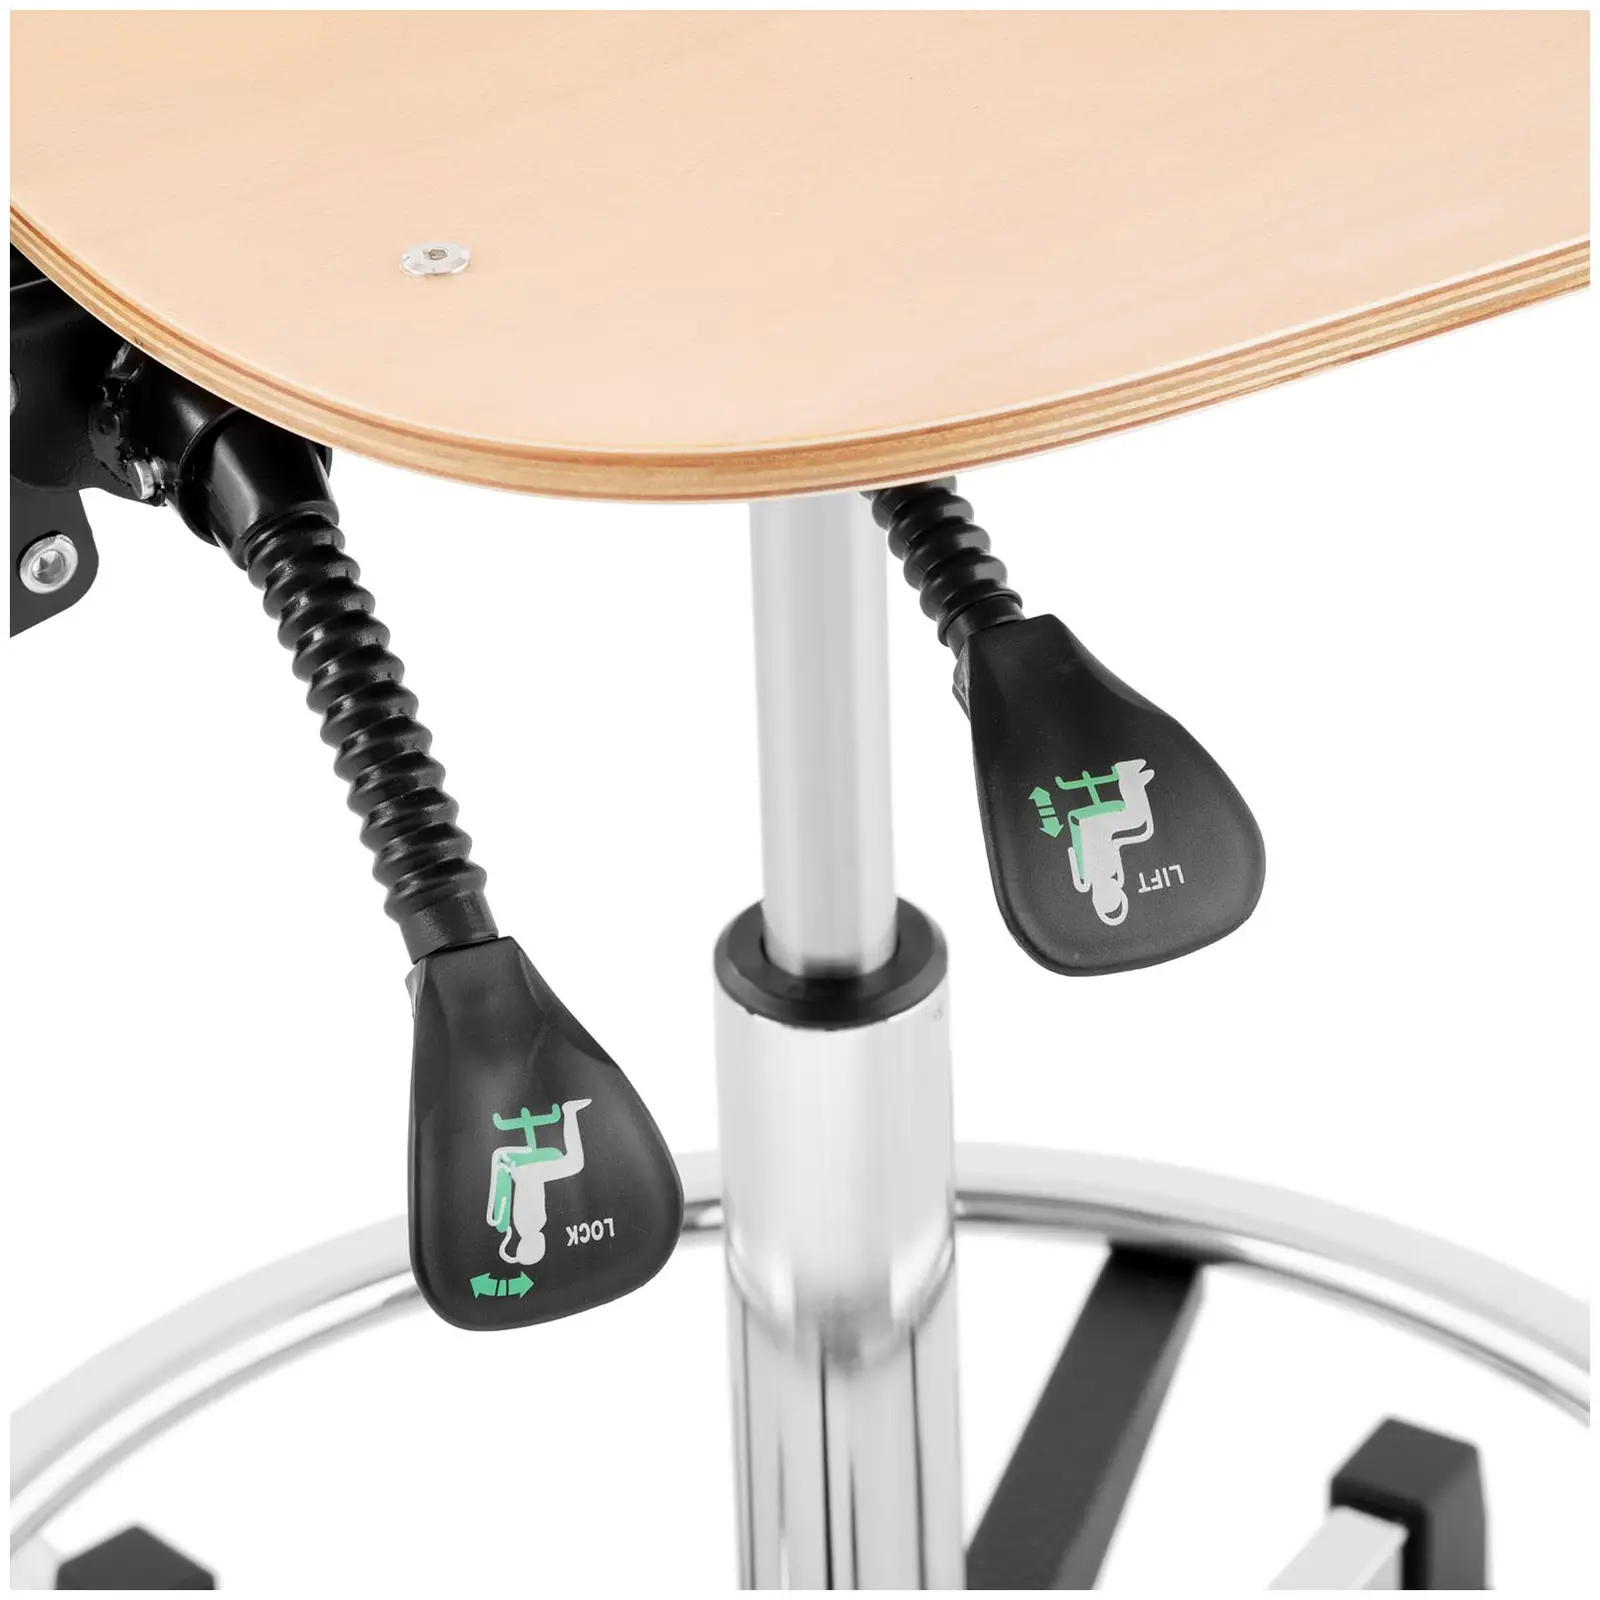 Cadeira de oficina - 120 kg - madeira, elementos cromados - apoio para os pés - altura 550 - 800 mm